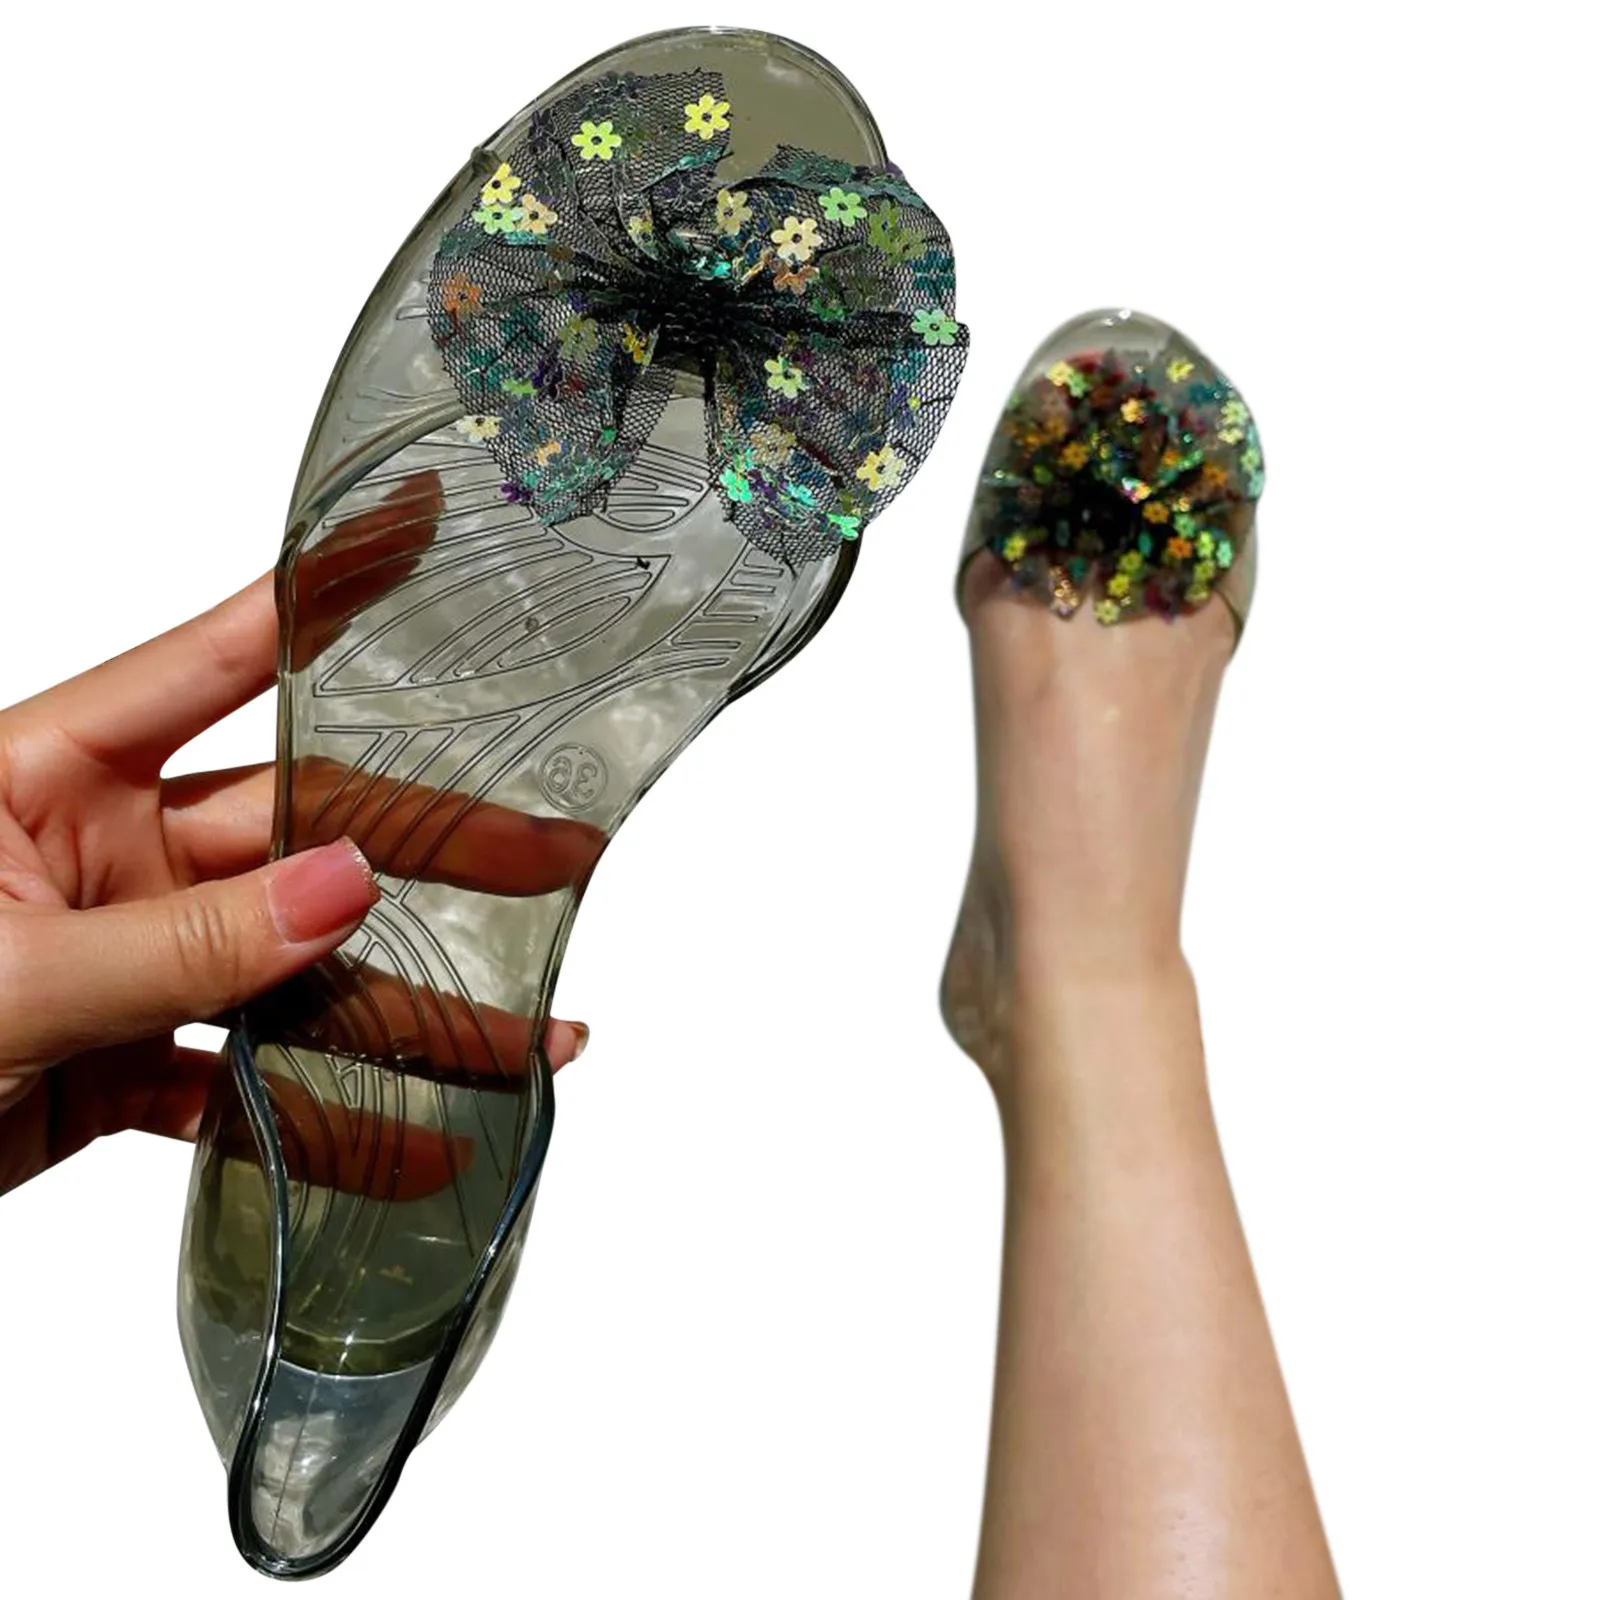 Jsezml Womens Rhinestone Sandals Flats Sparkly Diamond Butterfly Wedding  Sandals Open Toe Ankle Strap Dress Shoes 